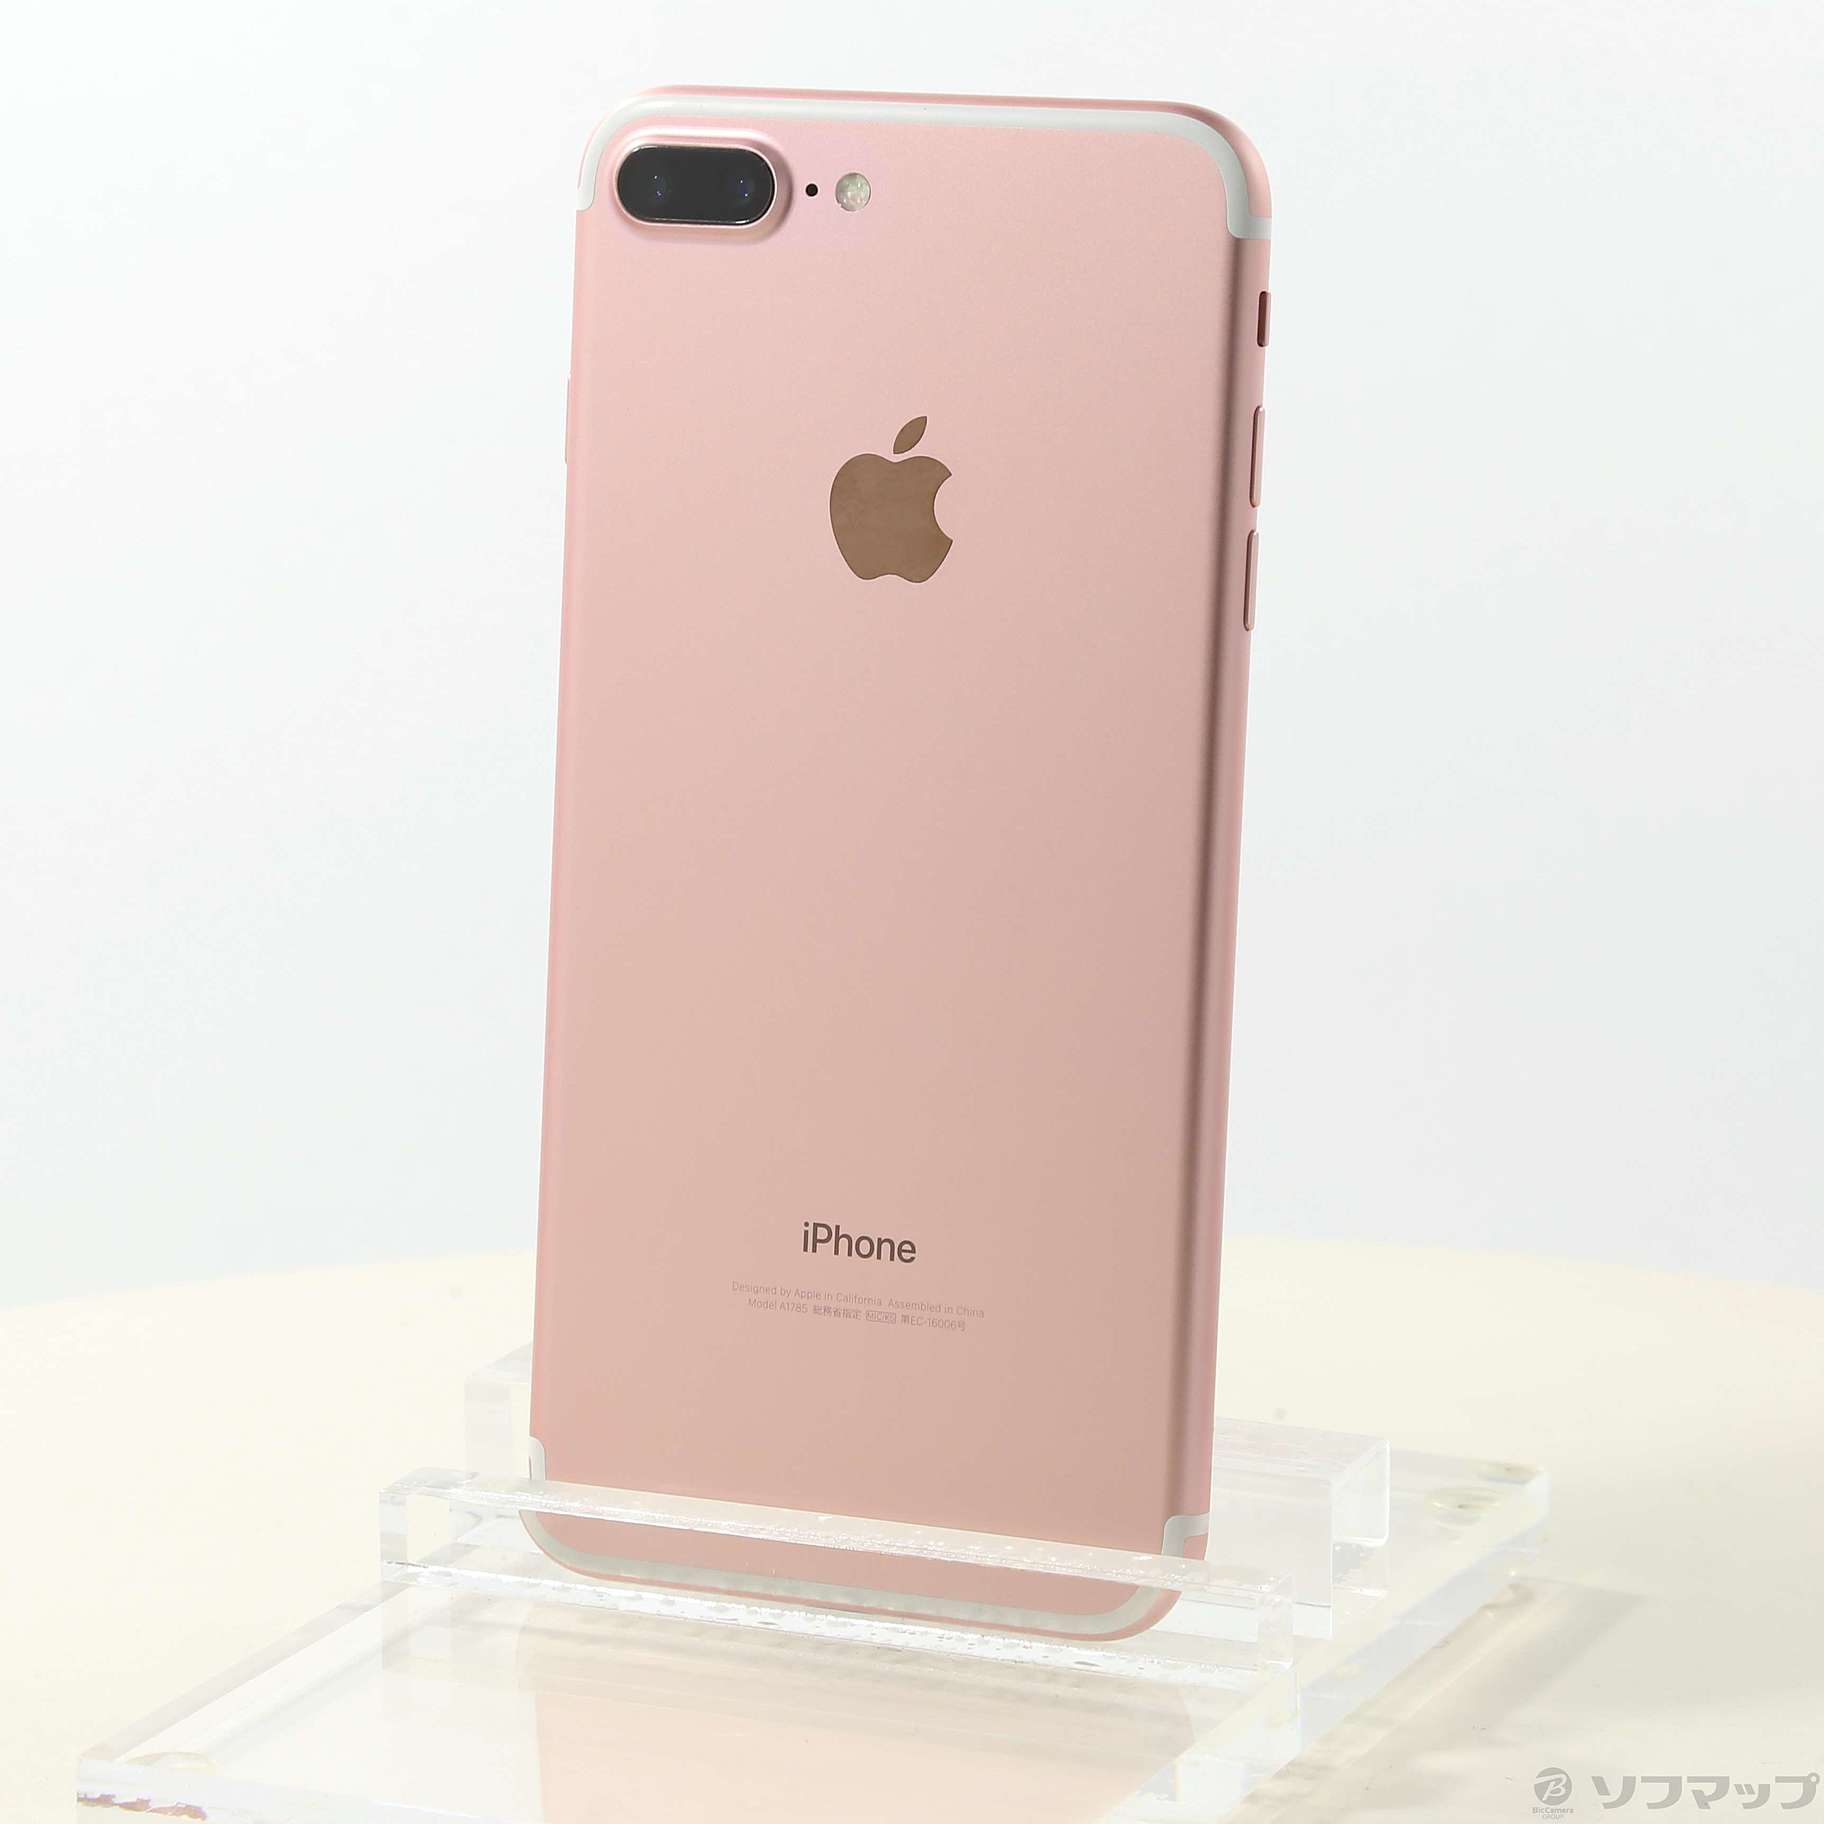 iPhone 7 plus gold 32GB simフリー